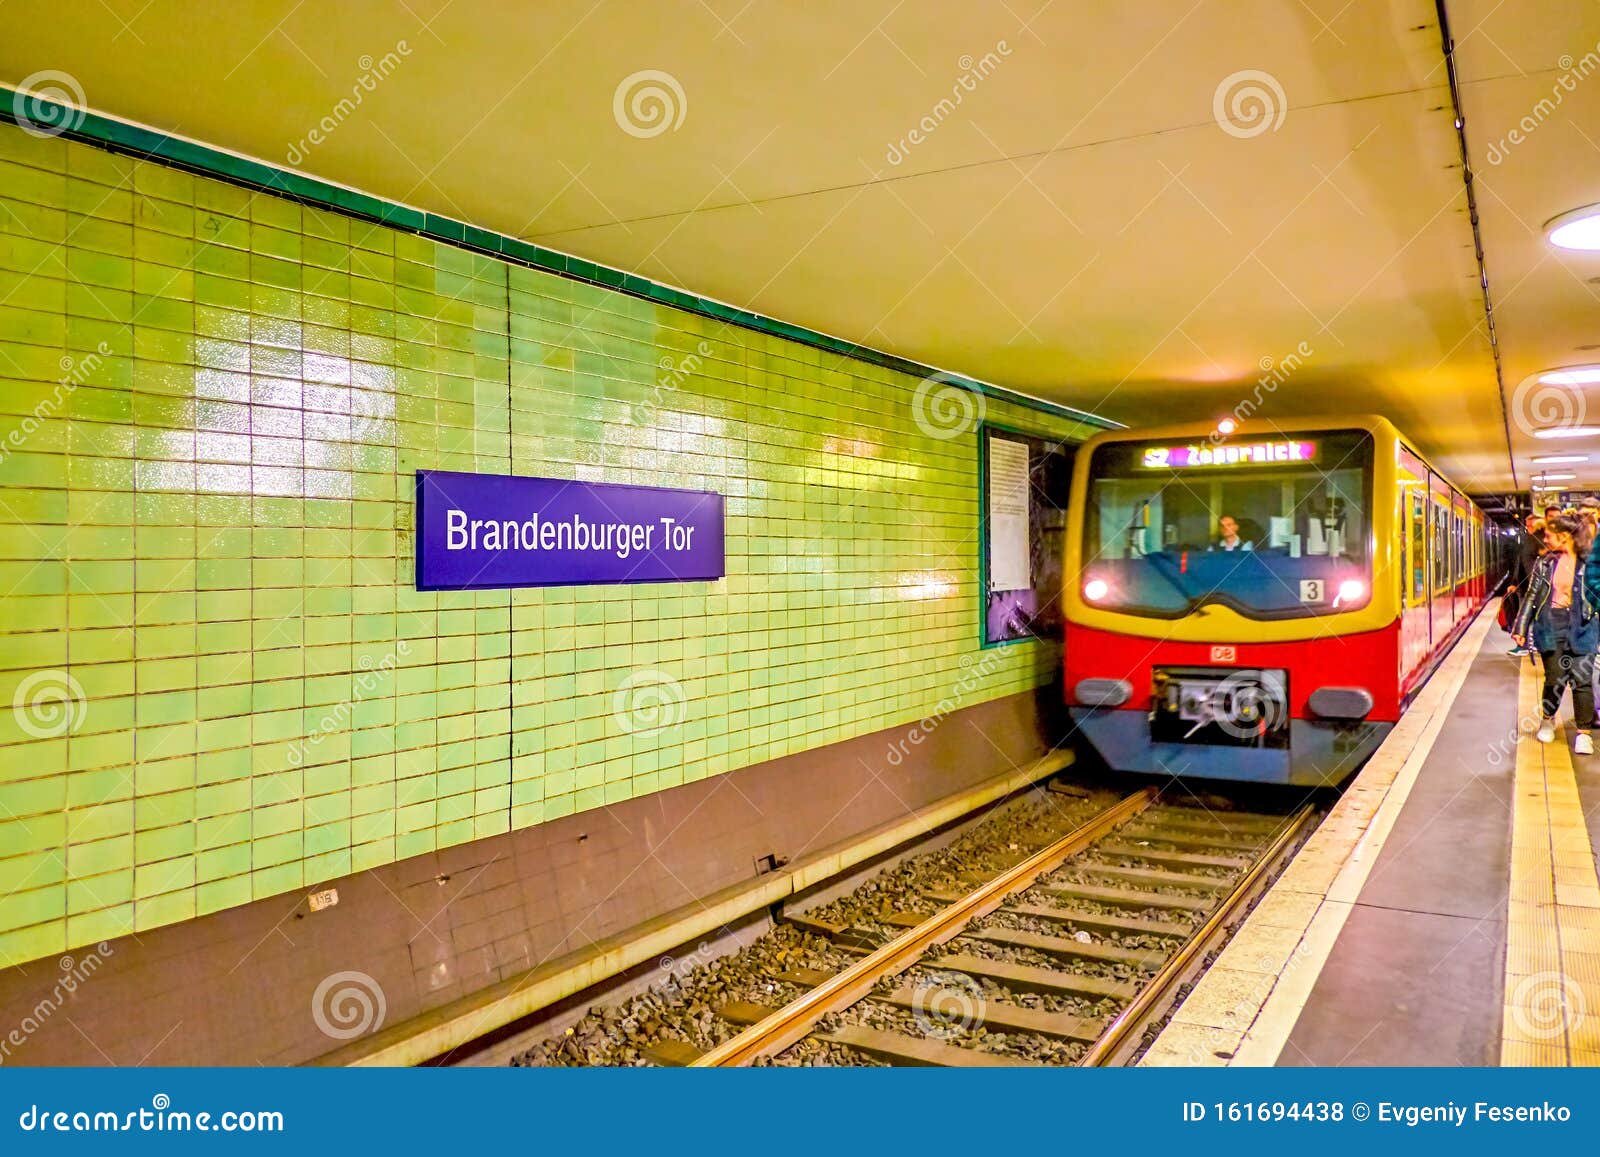 The U-bahn Train in Brandenburg Tor Station in Berlin, Germany Editorial  Stock Photo - Image of platform, edifice: 161694438